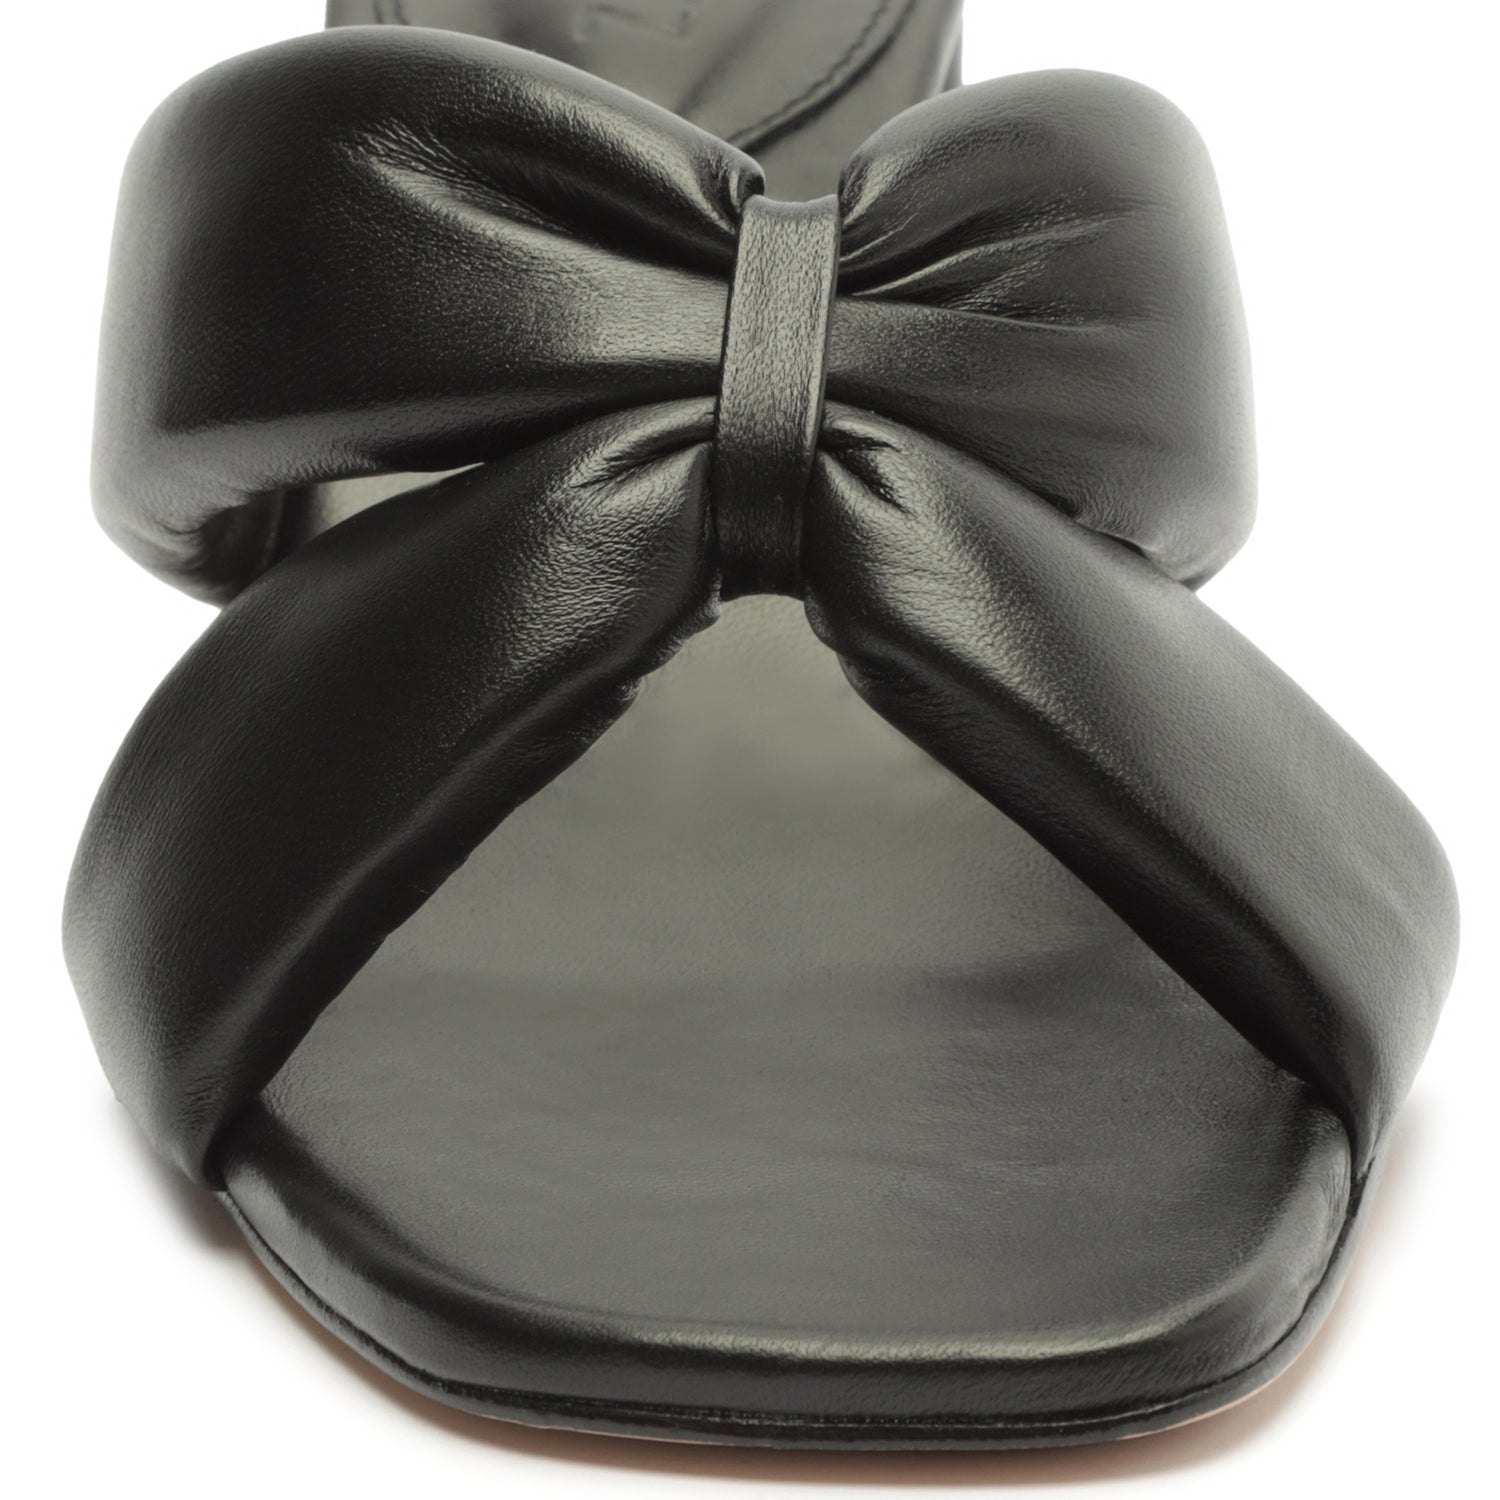 Fairy Mid Nappa Leather Sandal Black Nappa Leather